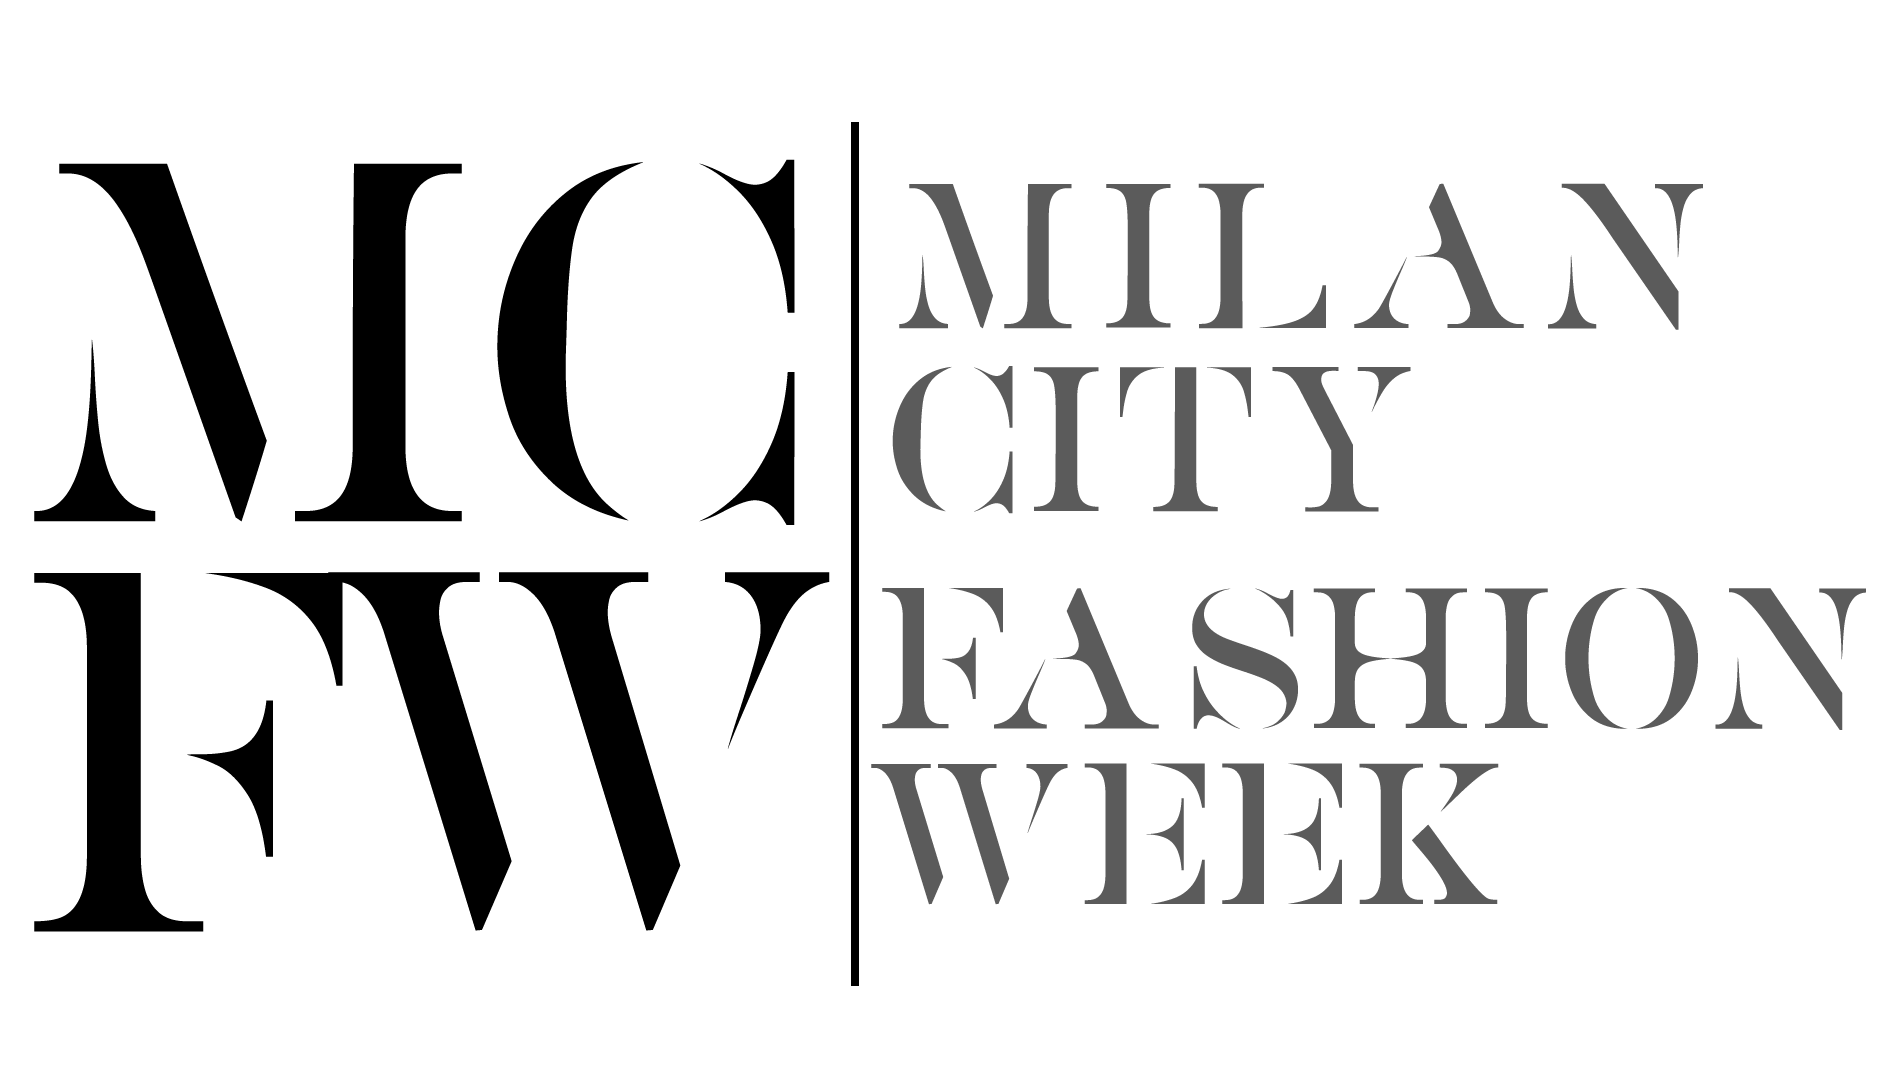 Save 15 on tickets to Milan City Fashion Week! Fashion Week Online®